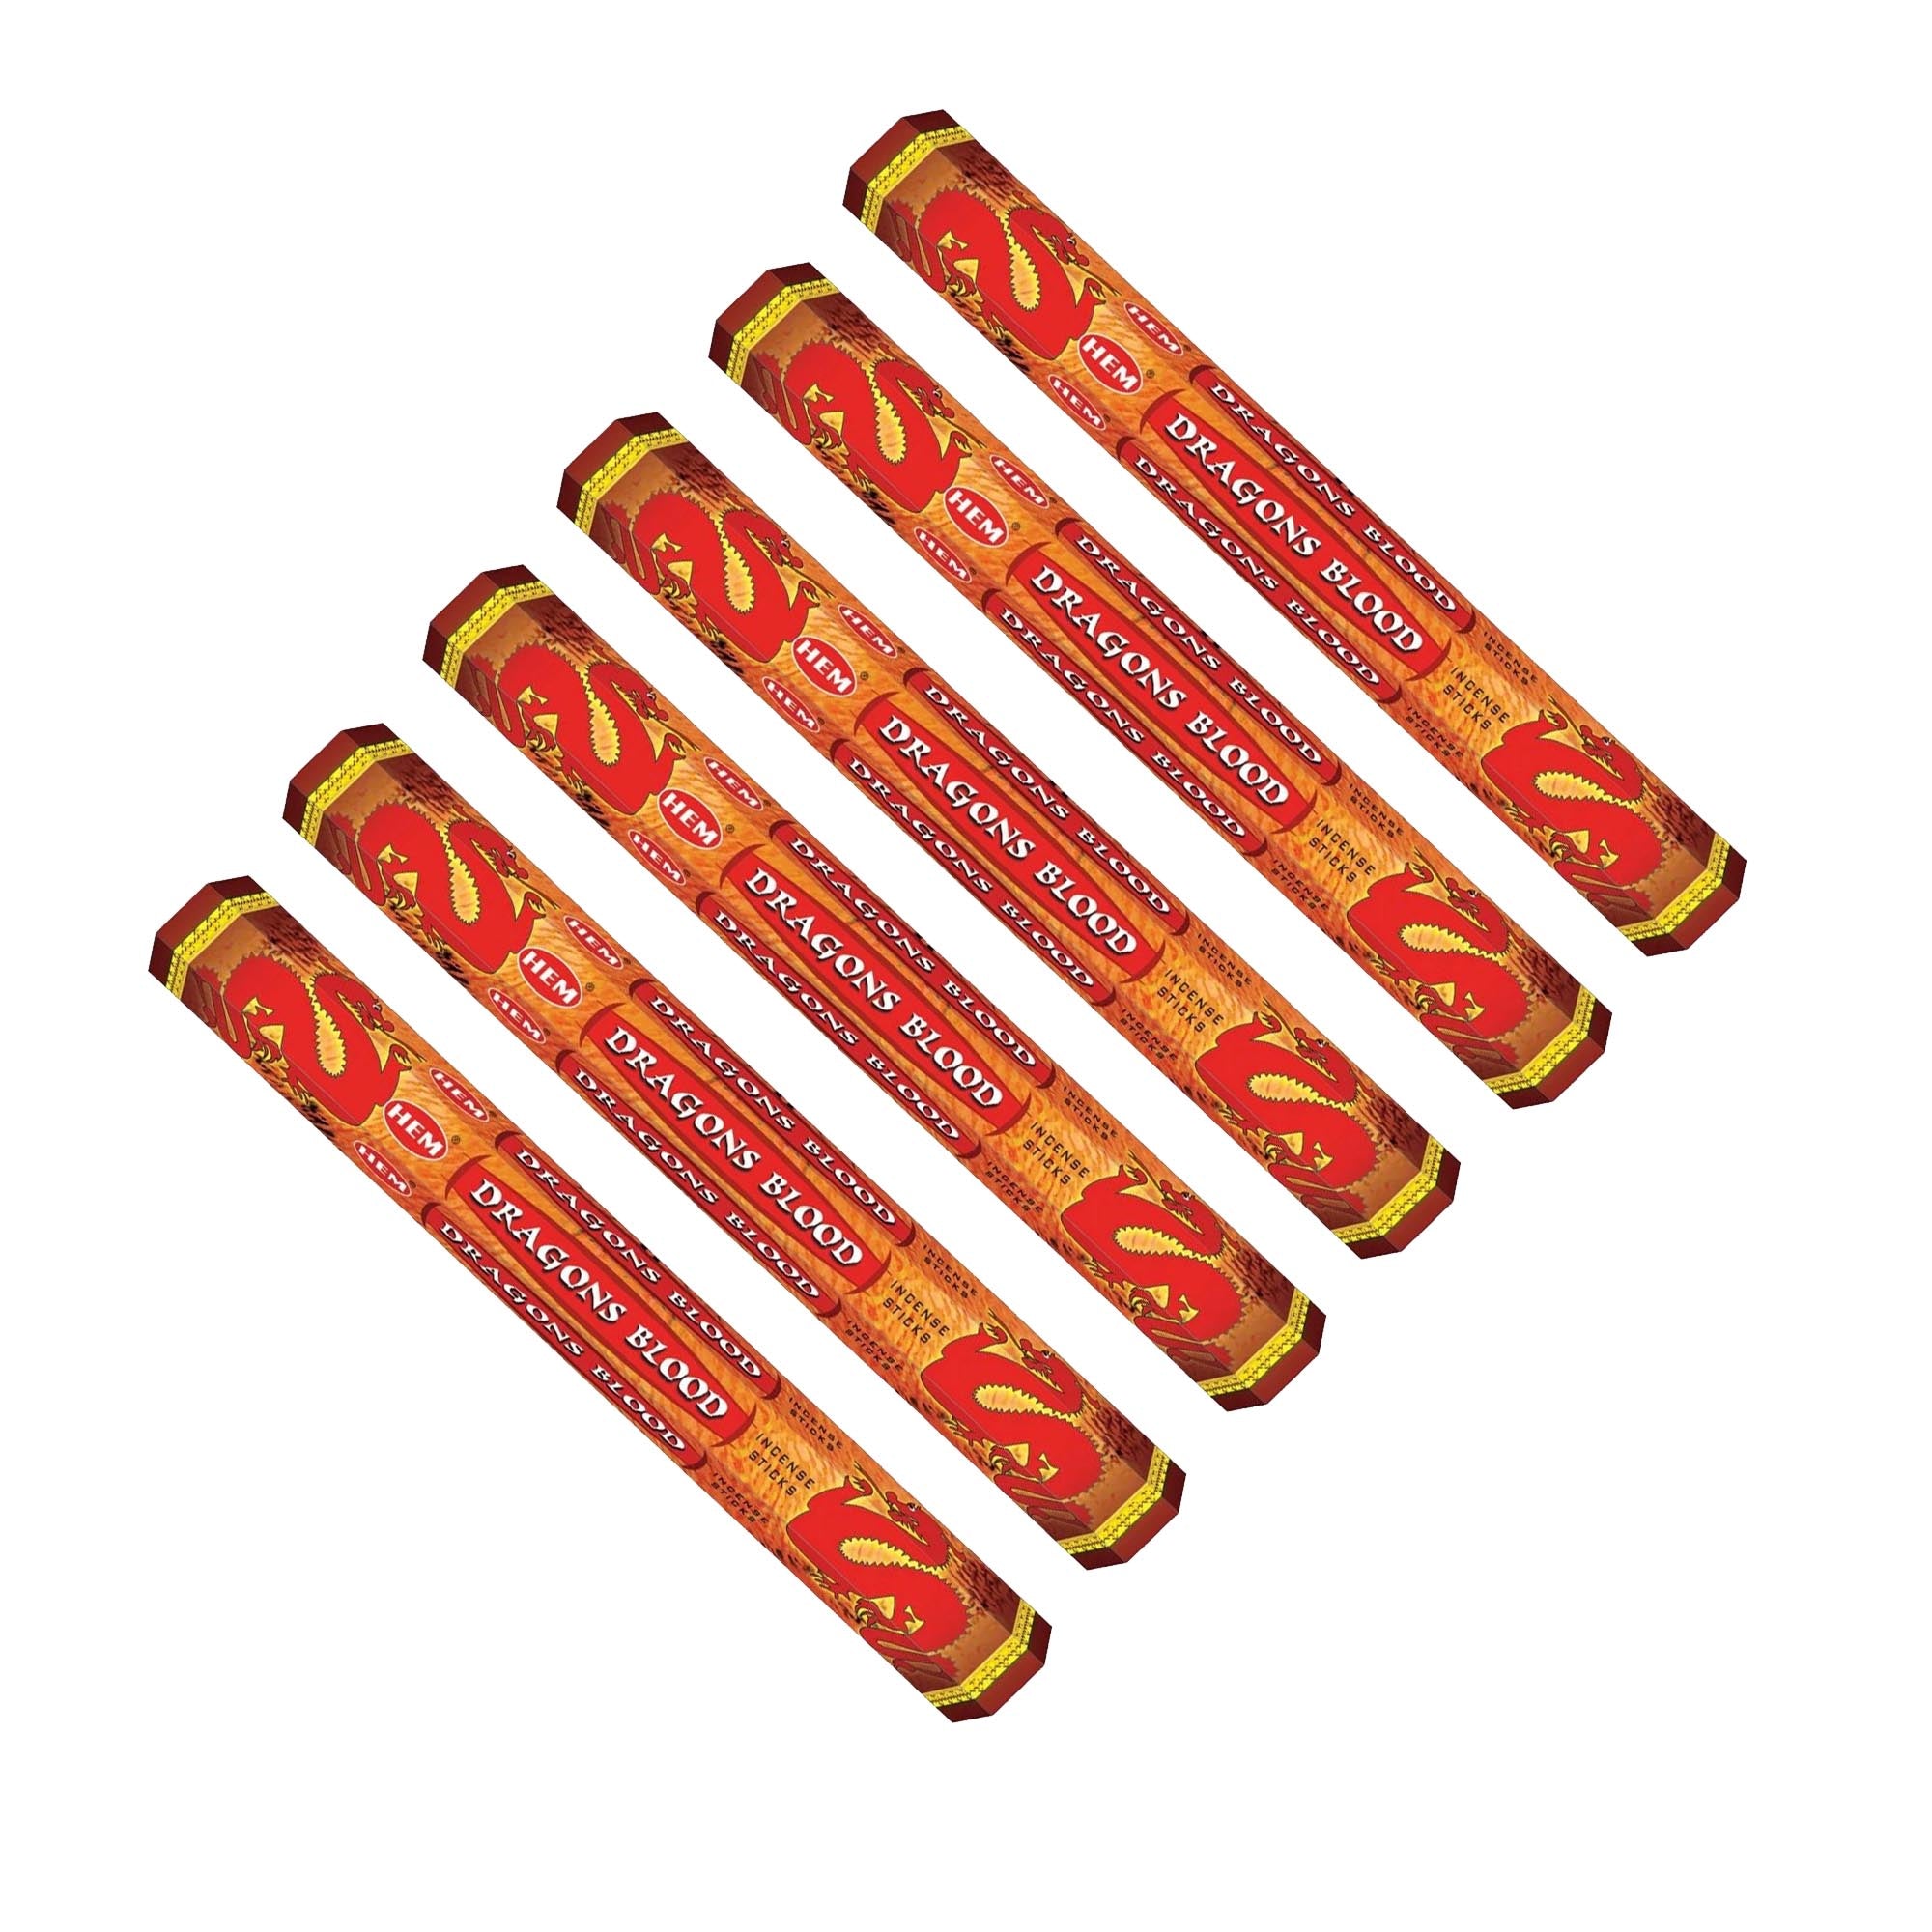 HEM - Hexagon - Dragon's Blood Incense Sticks